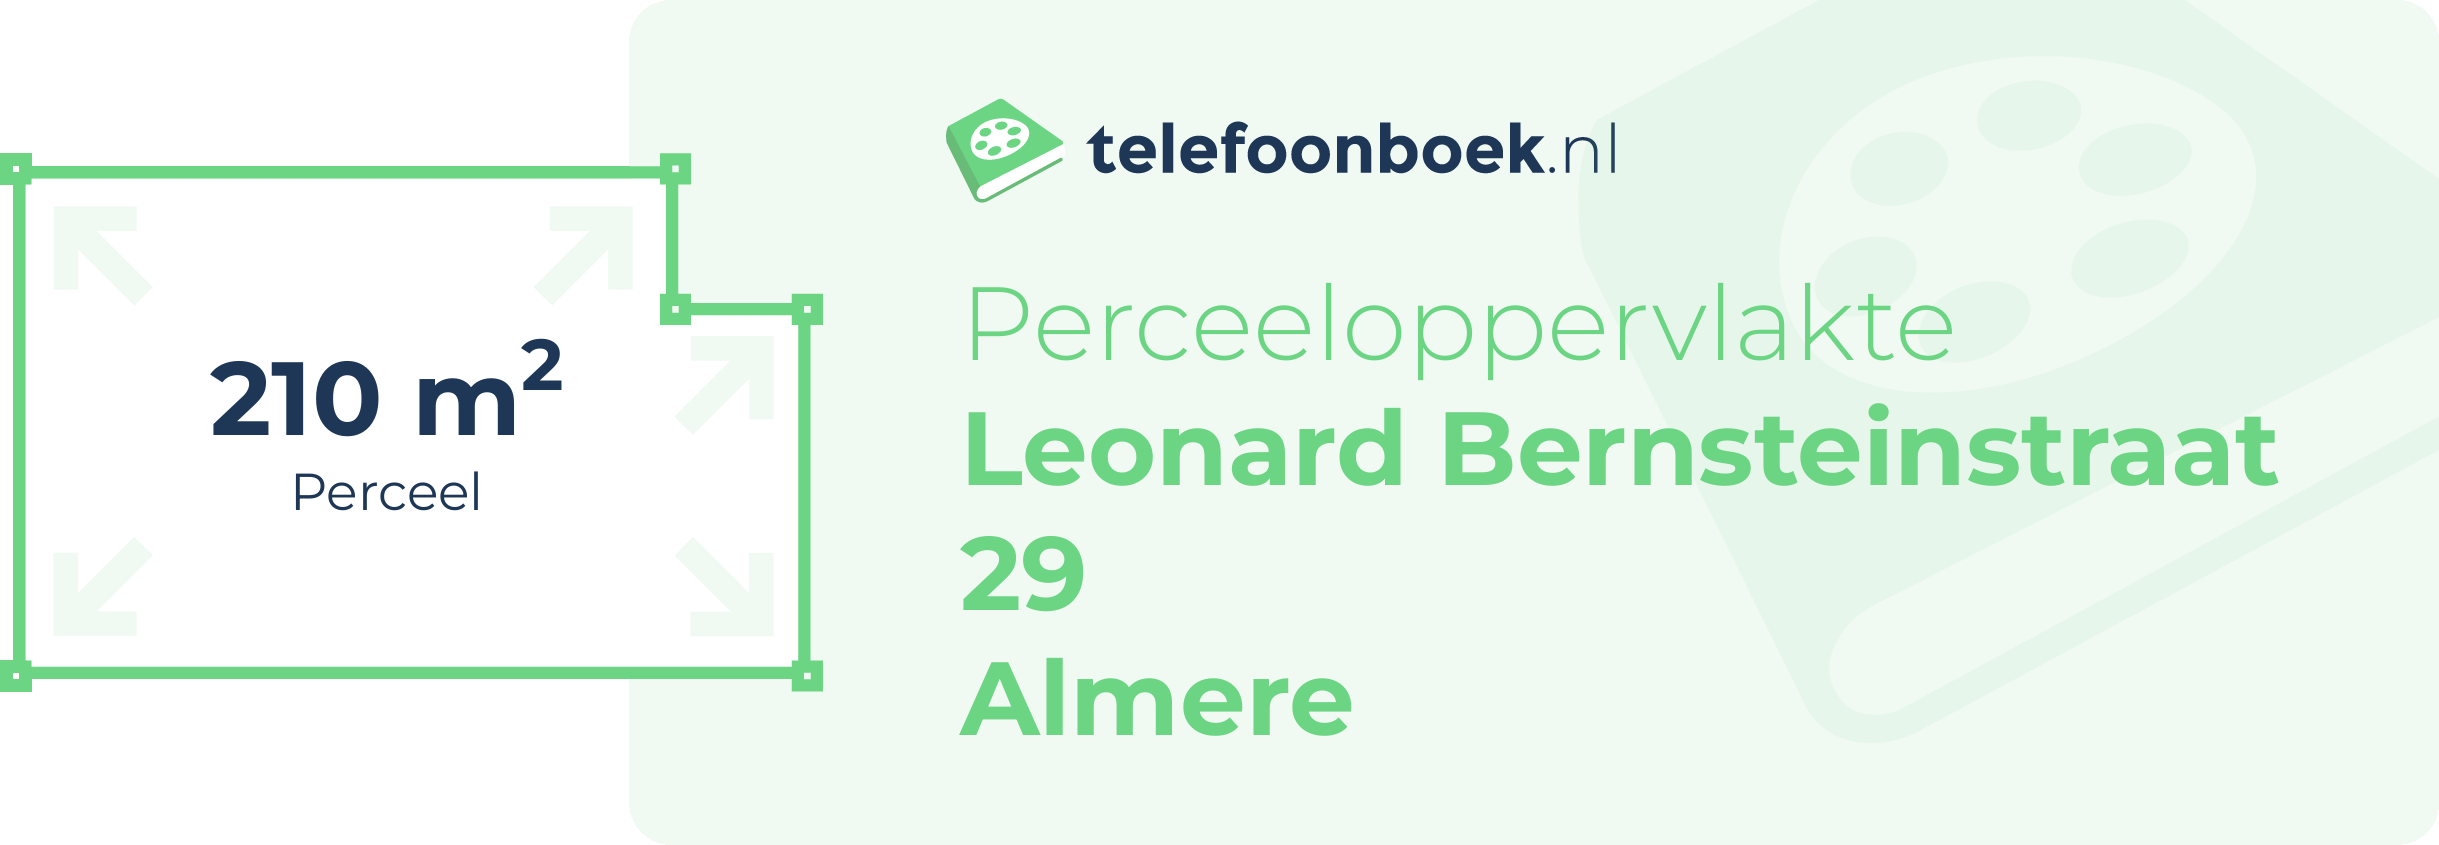 Perceeloppervlakte Leonard Bernsteinstraat 29 Almere